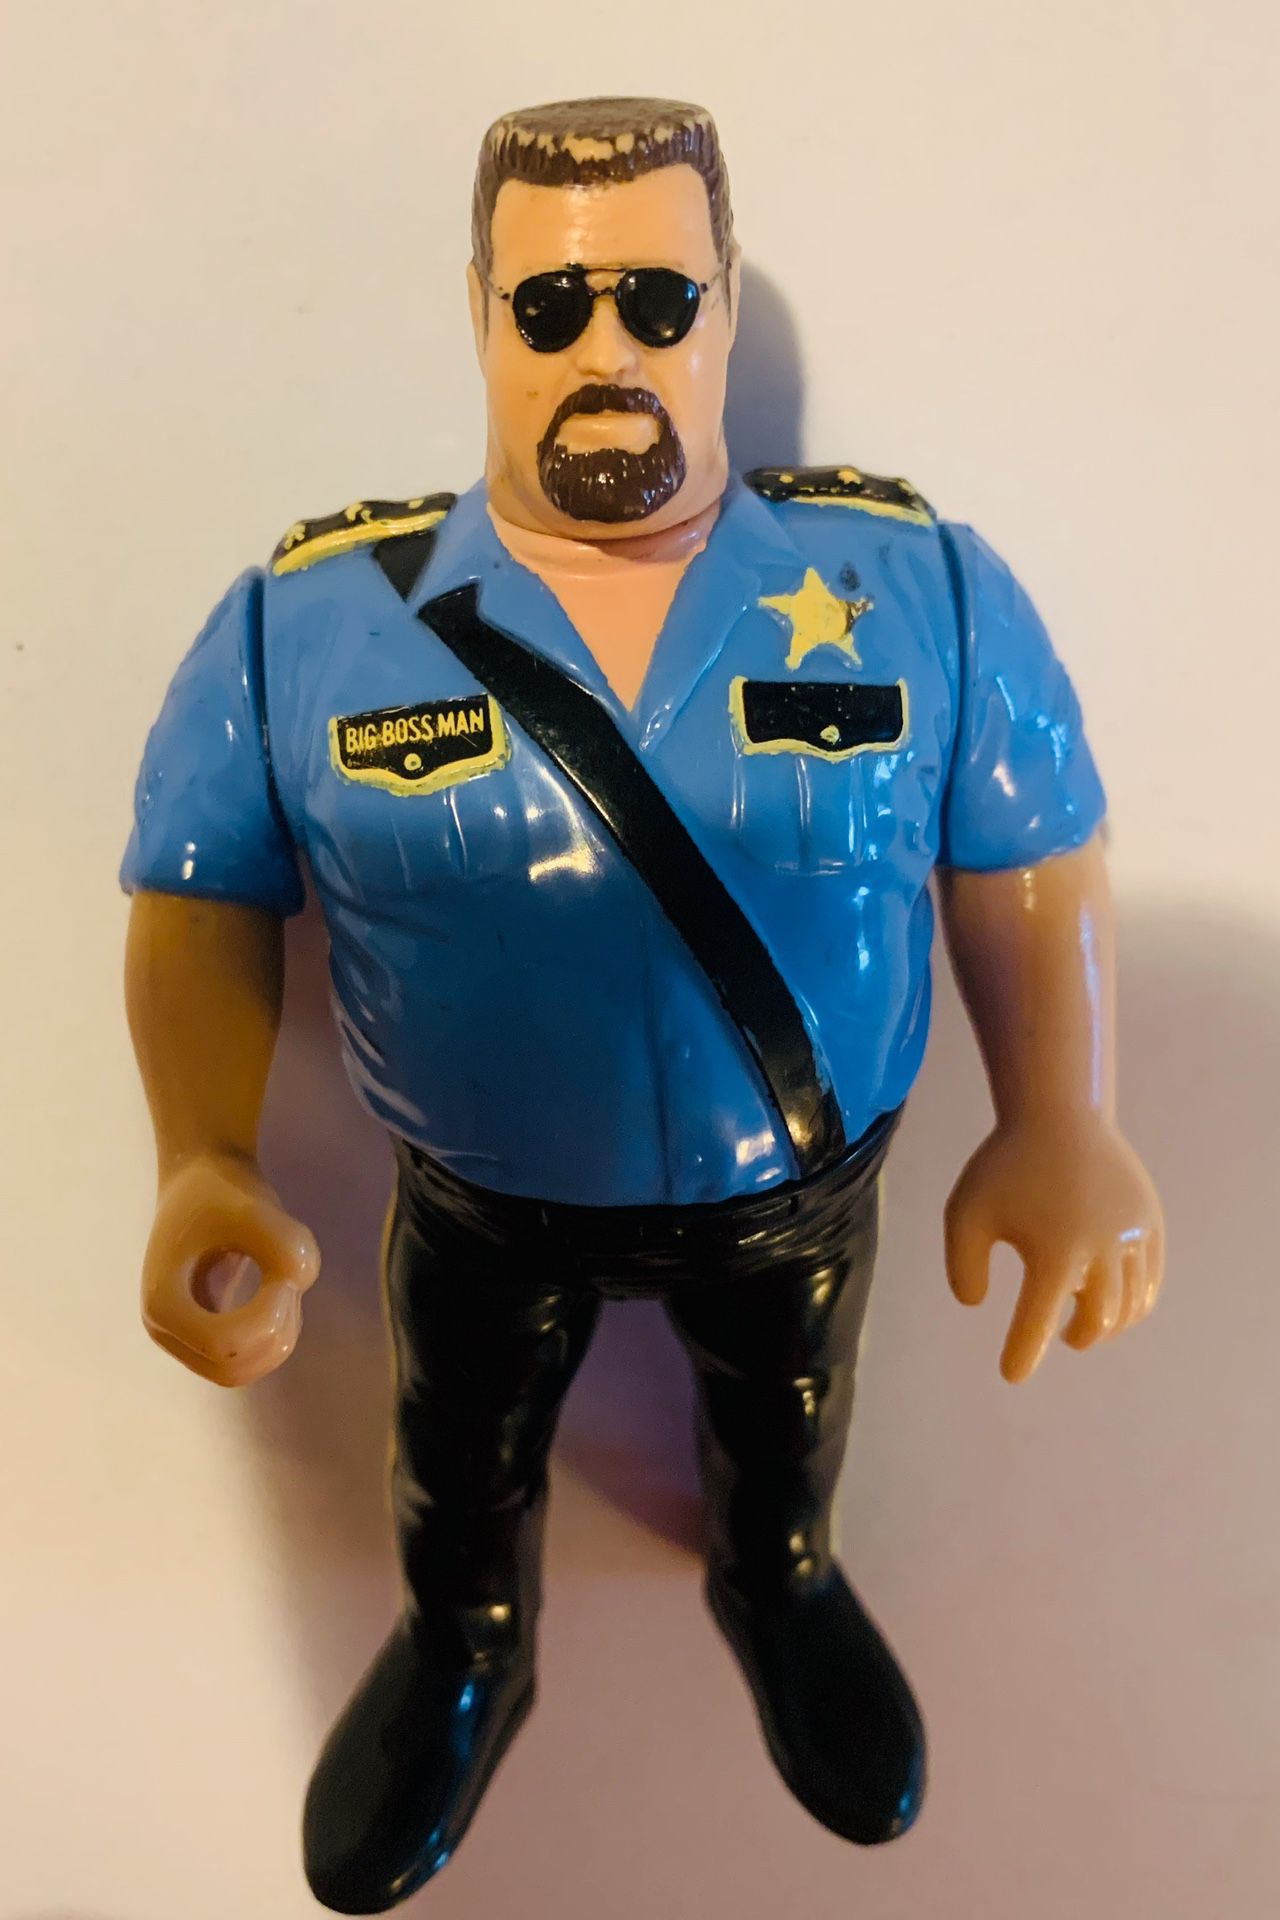 WWE WWF Big Boss Man 1990’s action figure